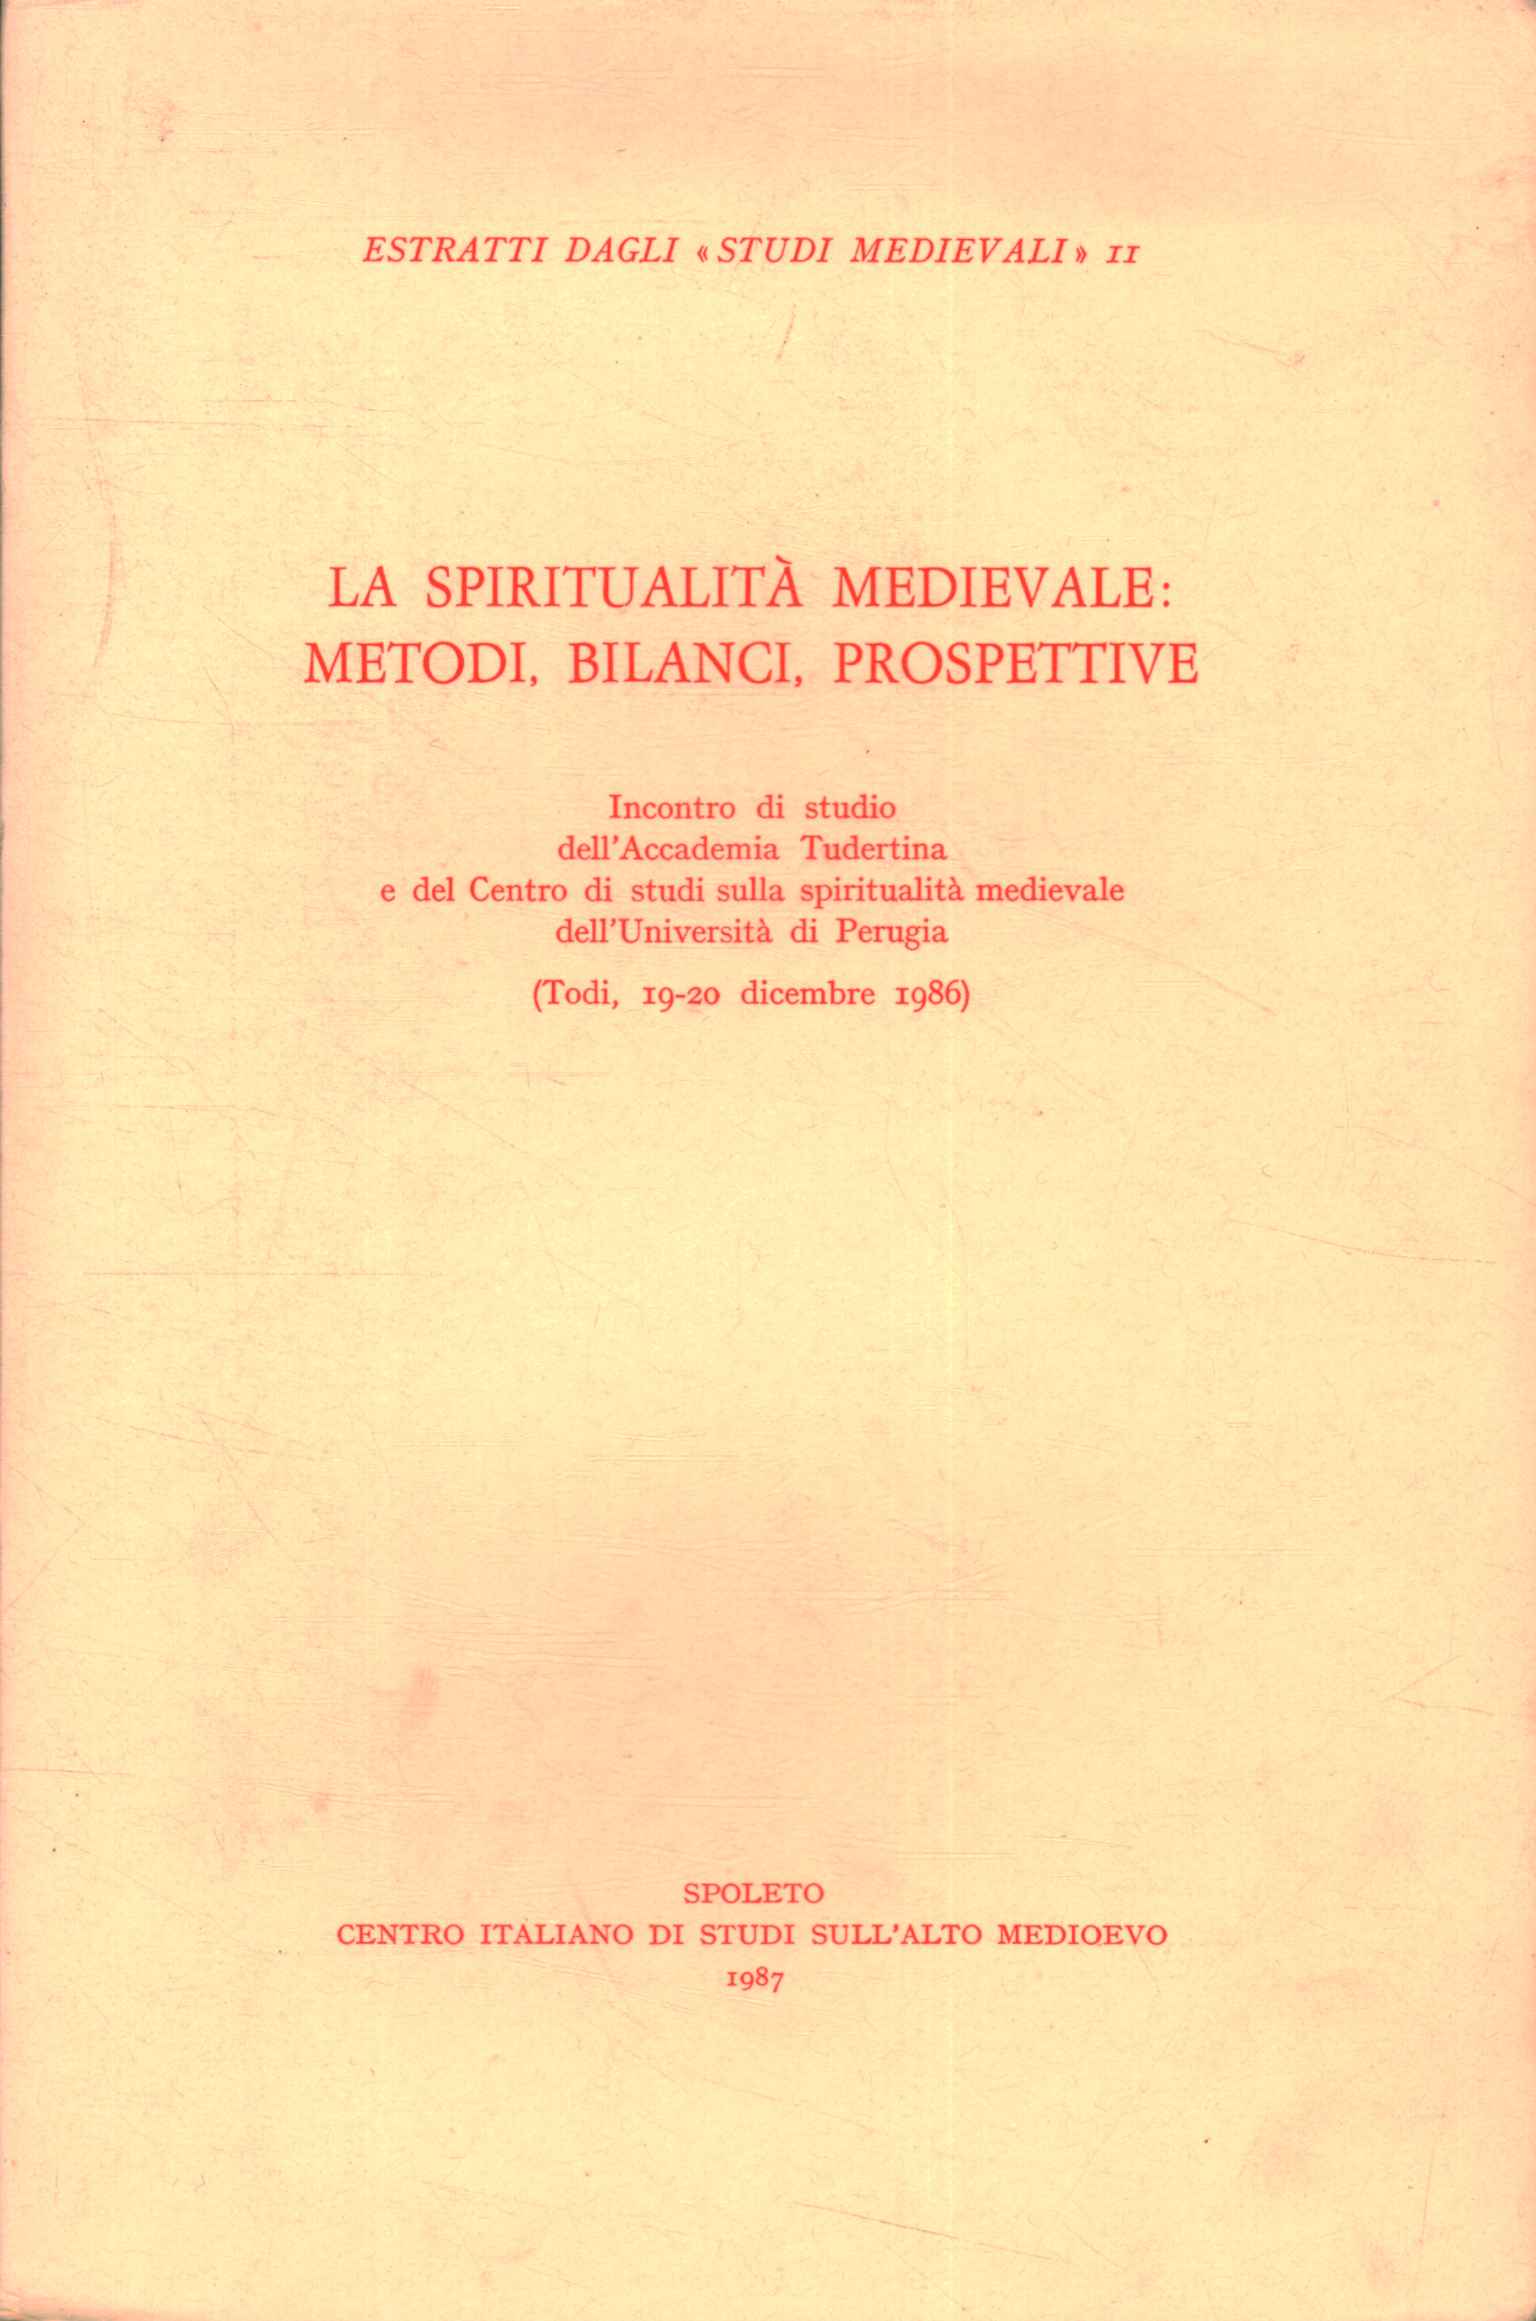 Medieval spirituality: bi methods